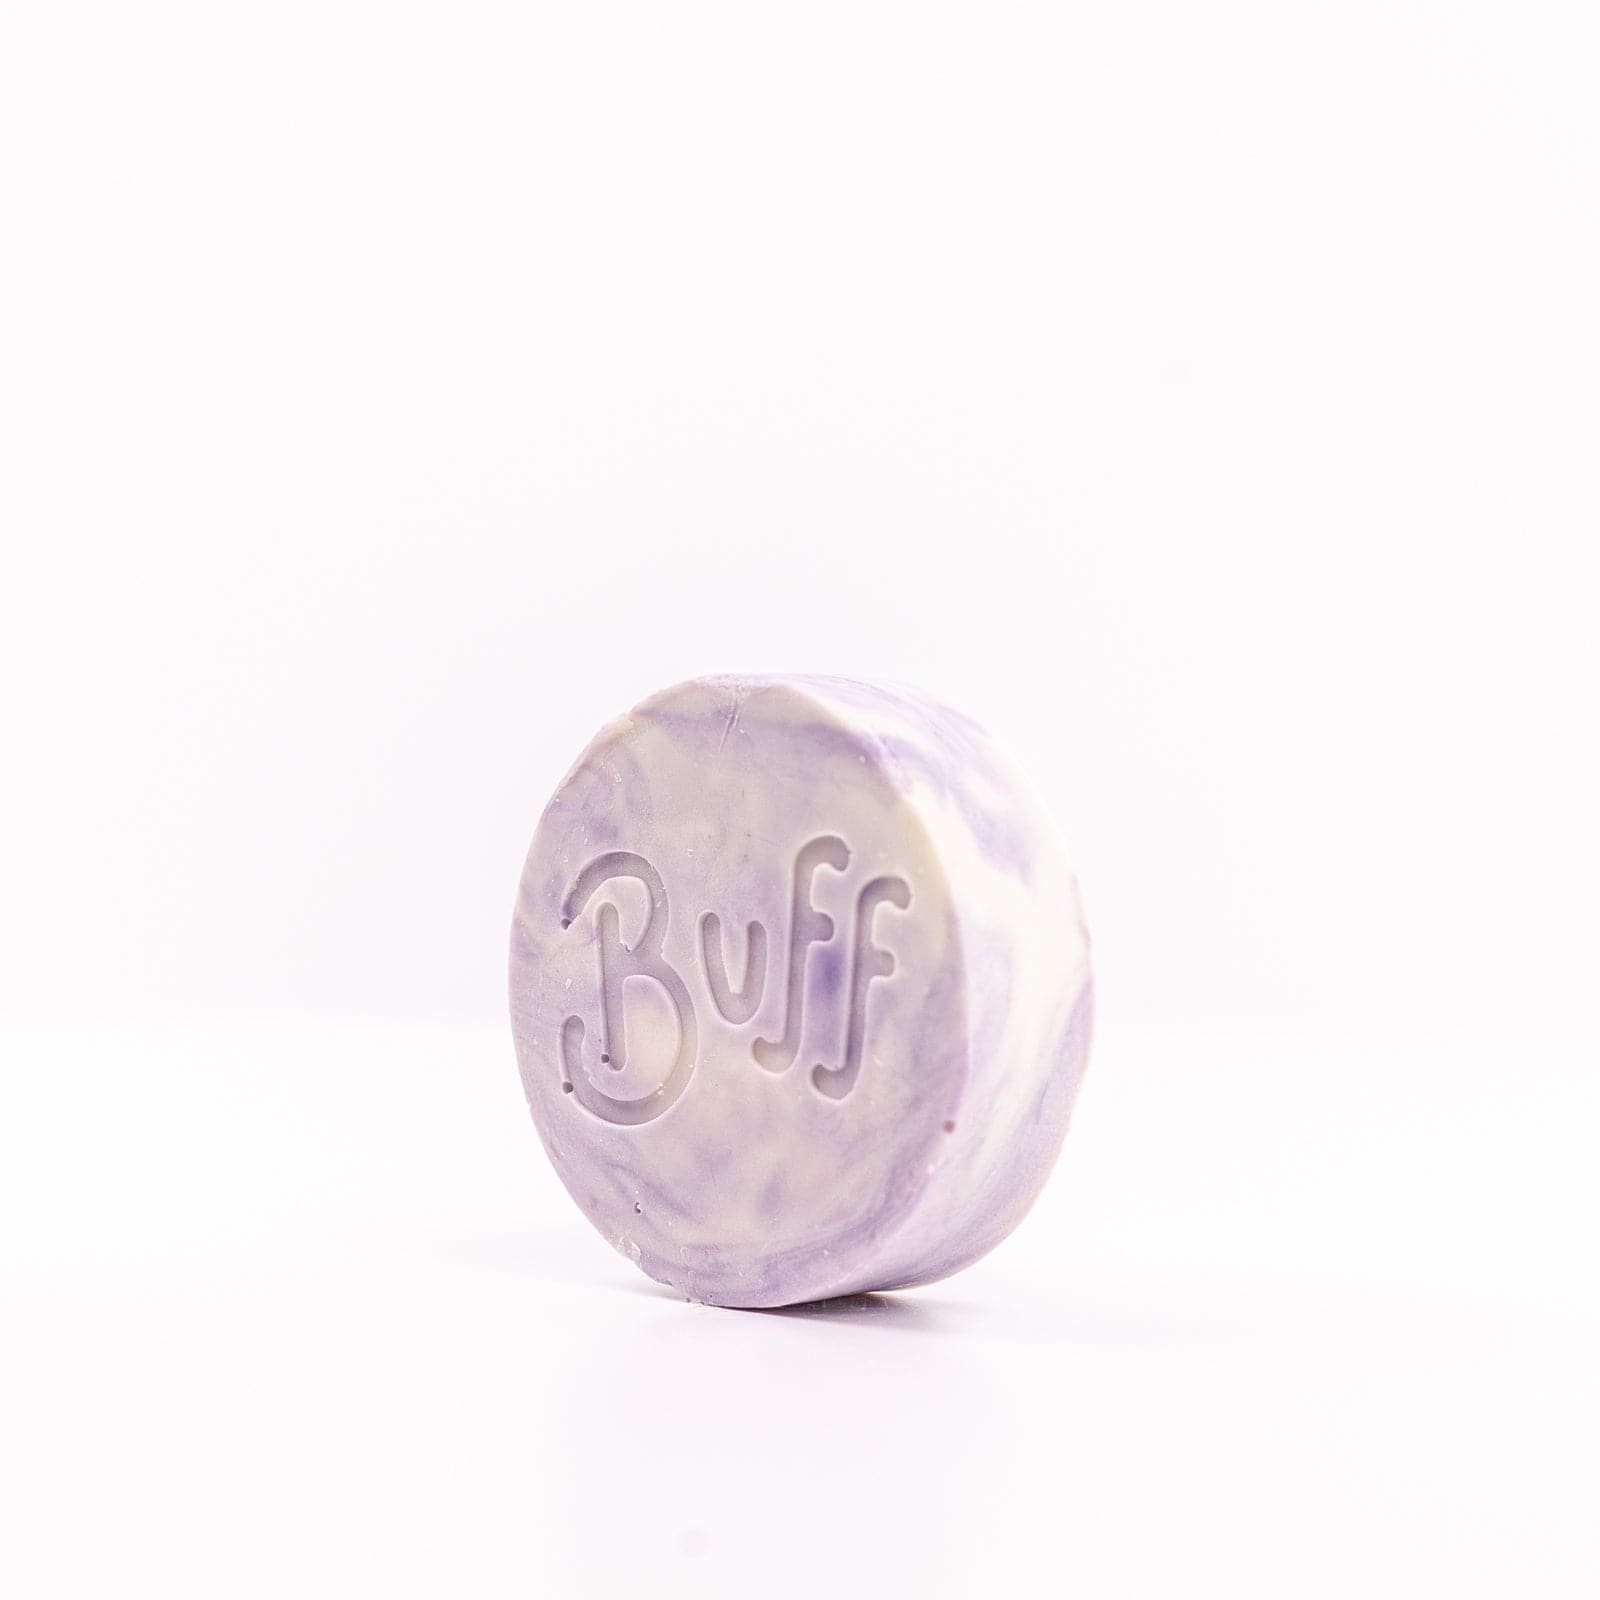 Buff City Soap's love potion multi-colored shave bar with a buff inscription